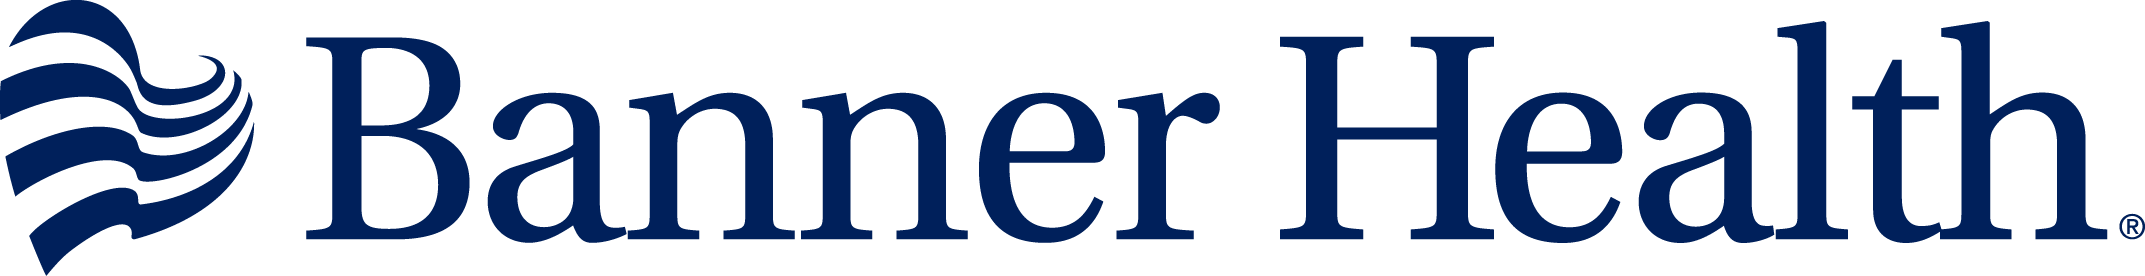 Banner Health logo